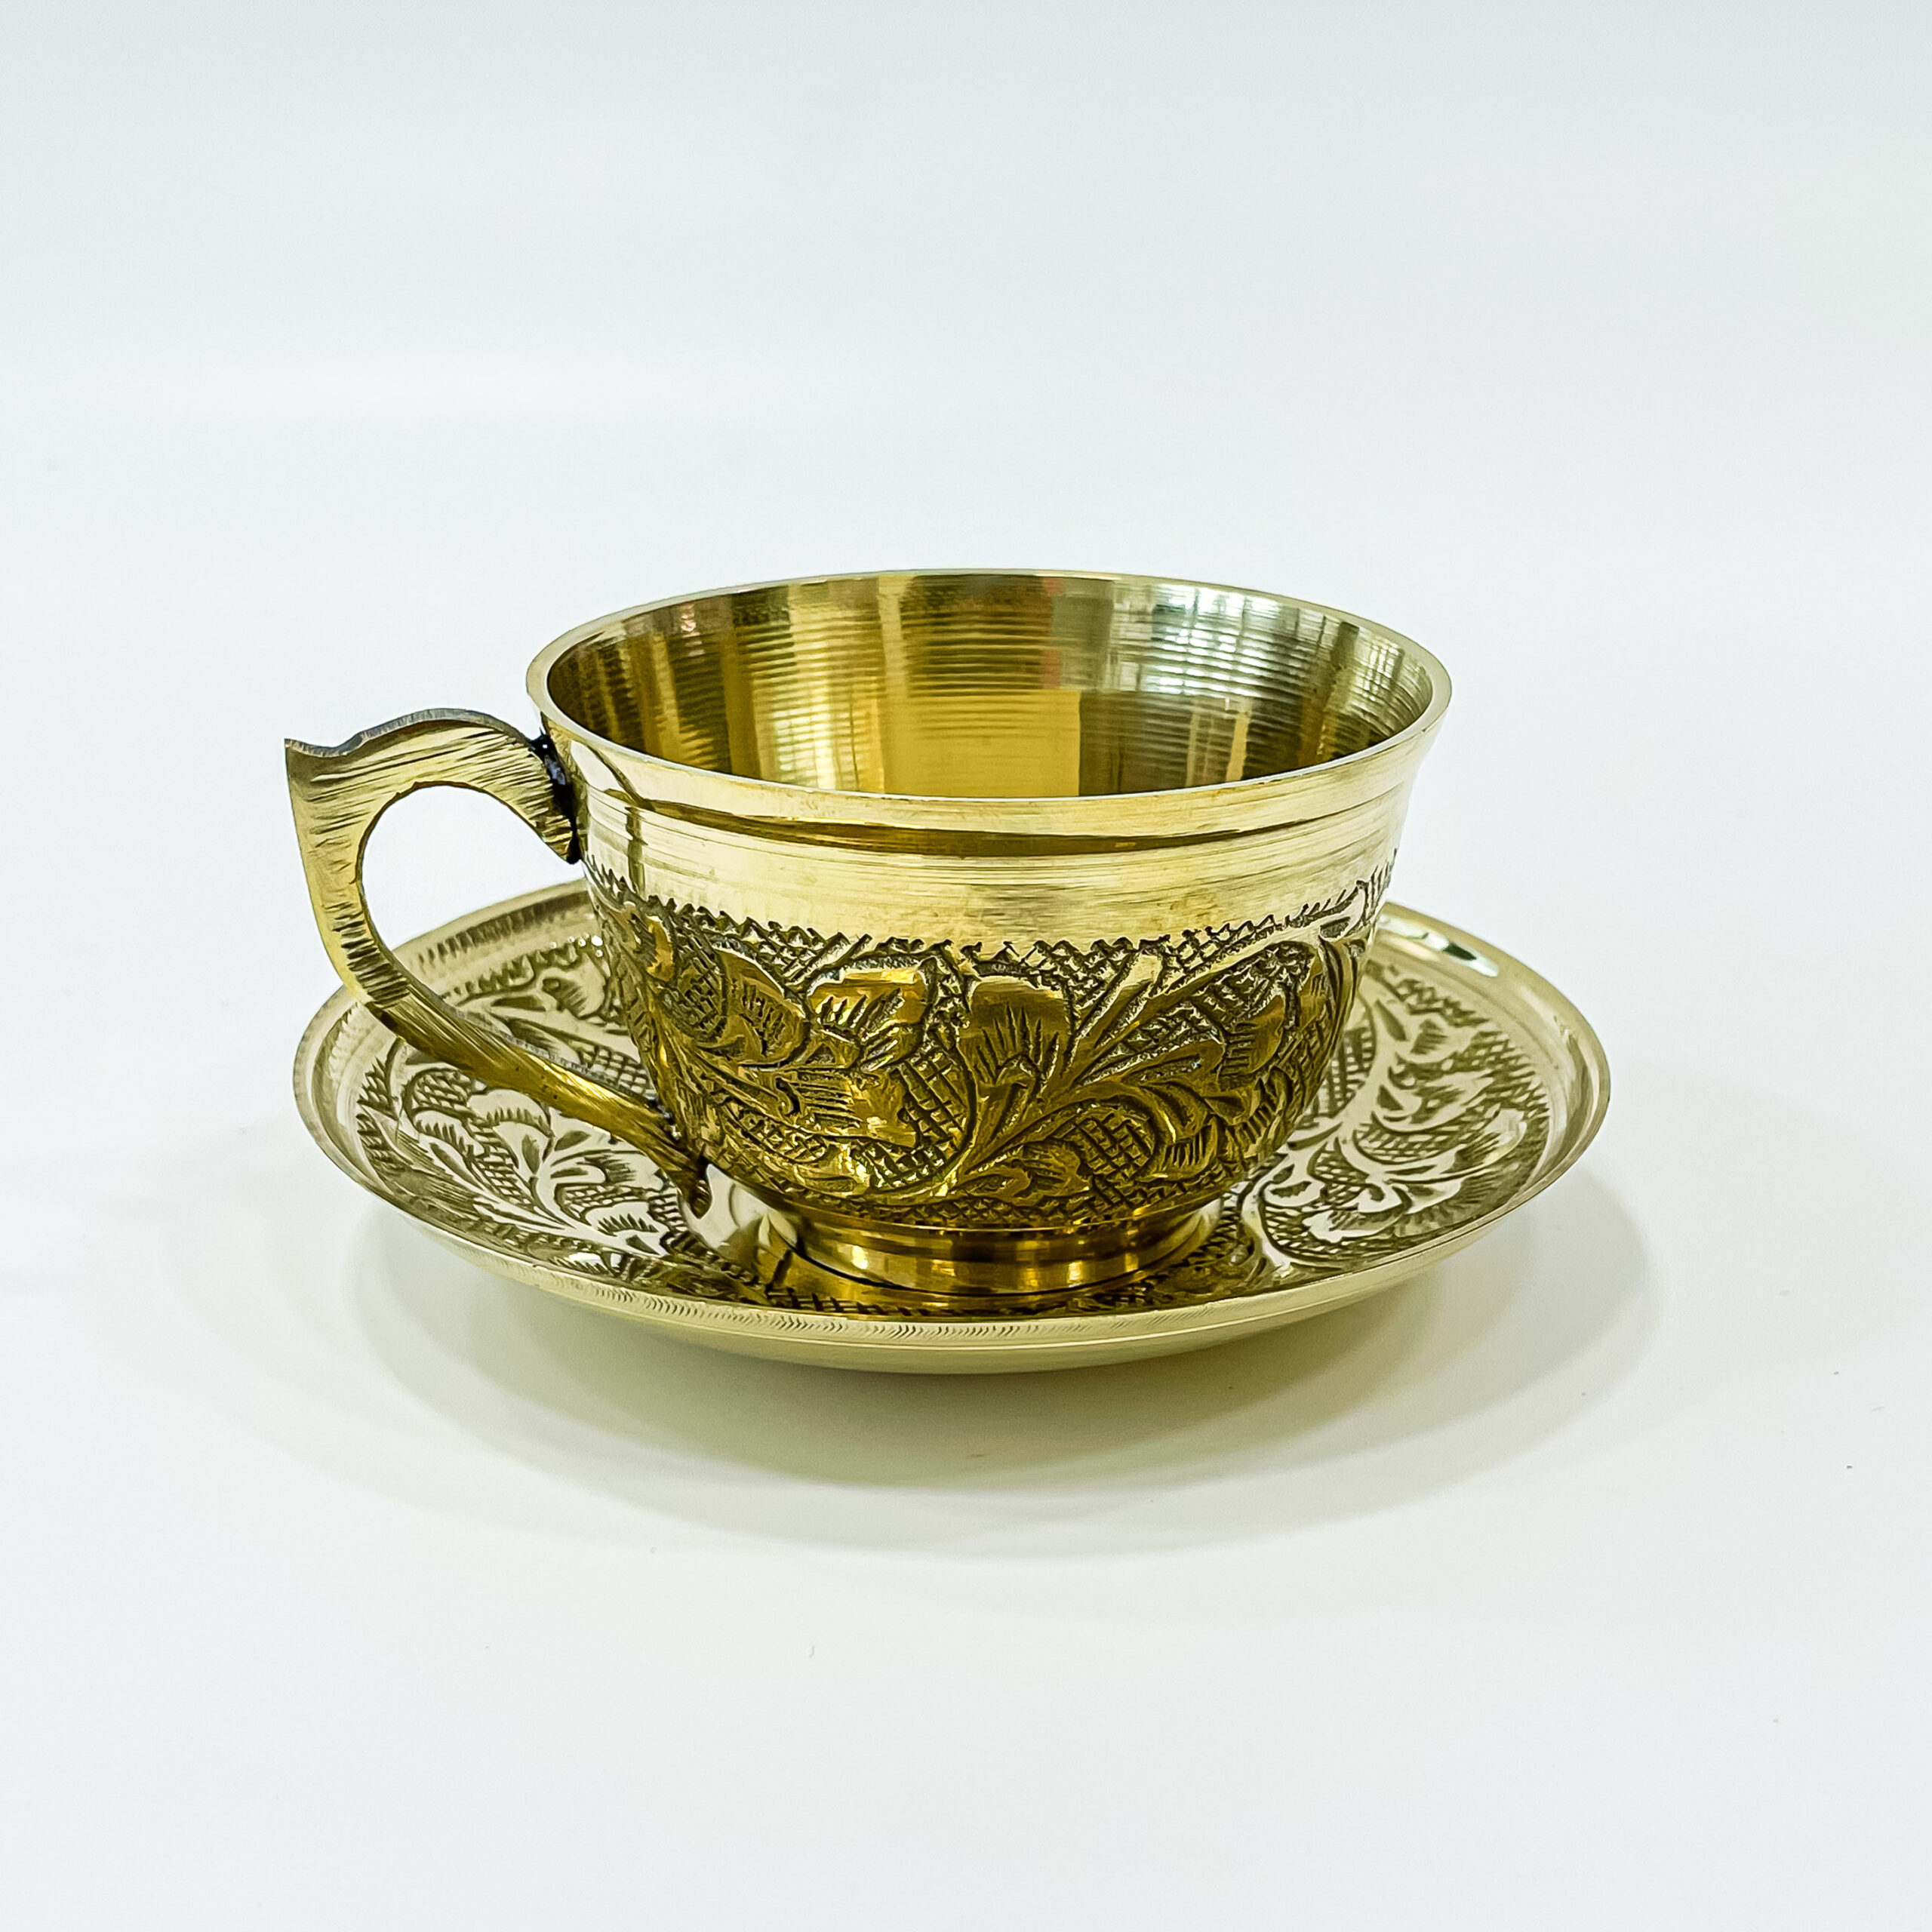 Buy Best Golden Brass Cup With Saucer Online